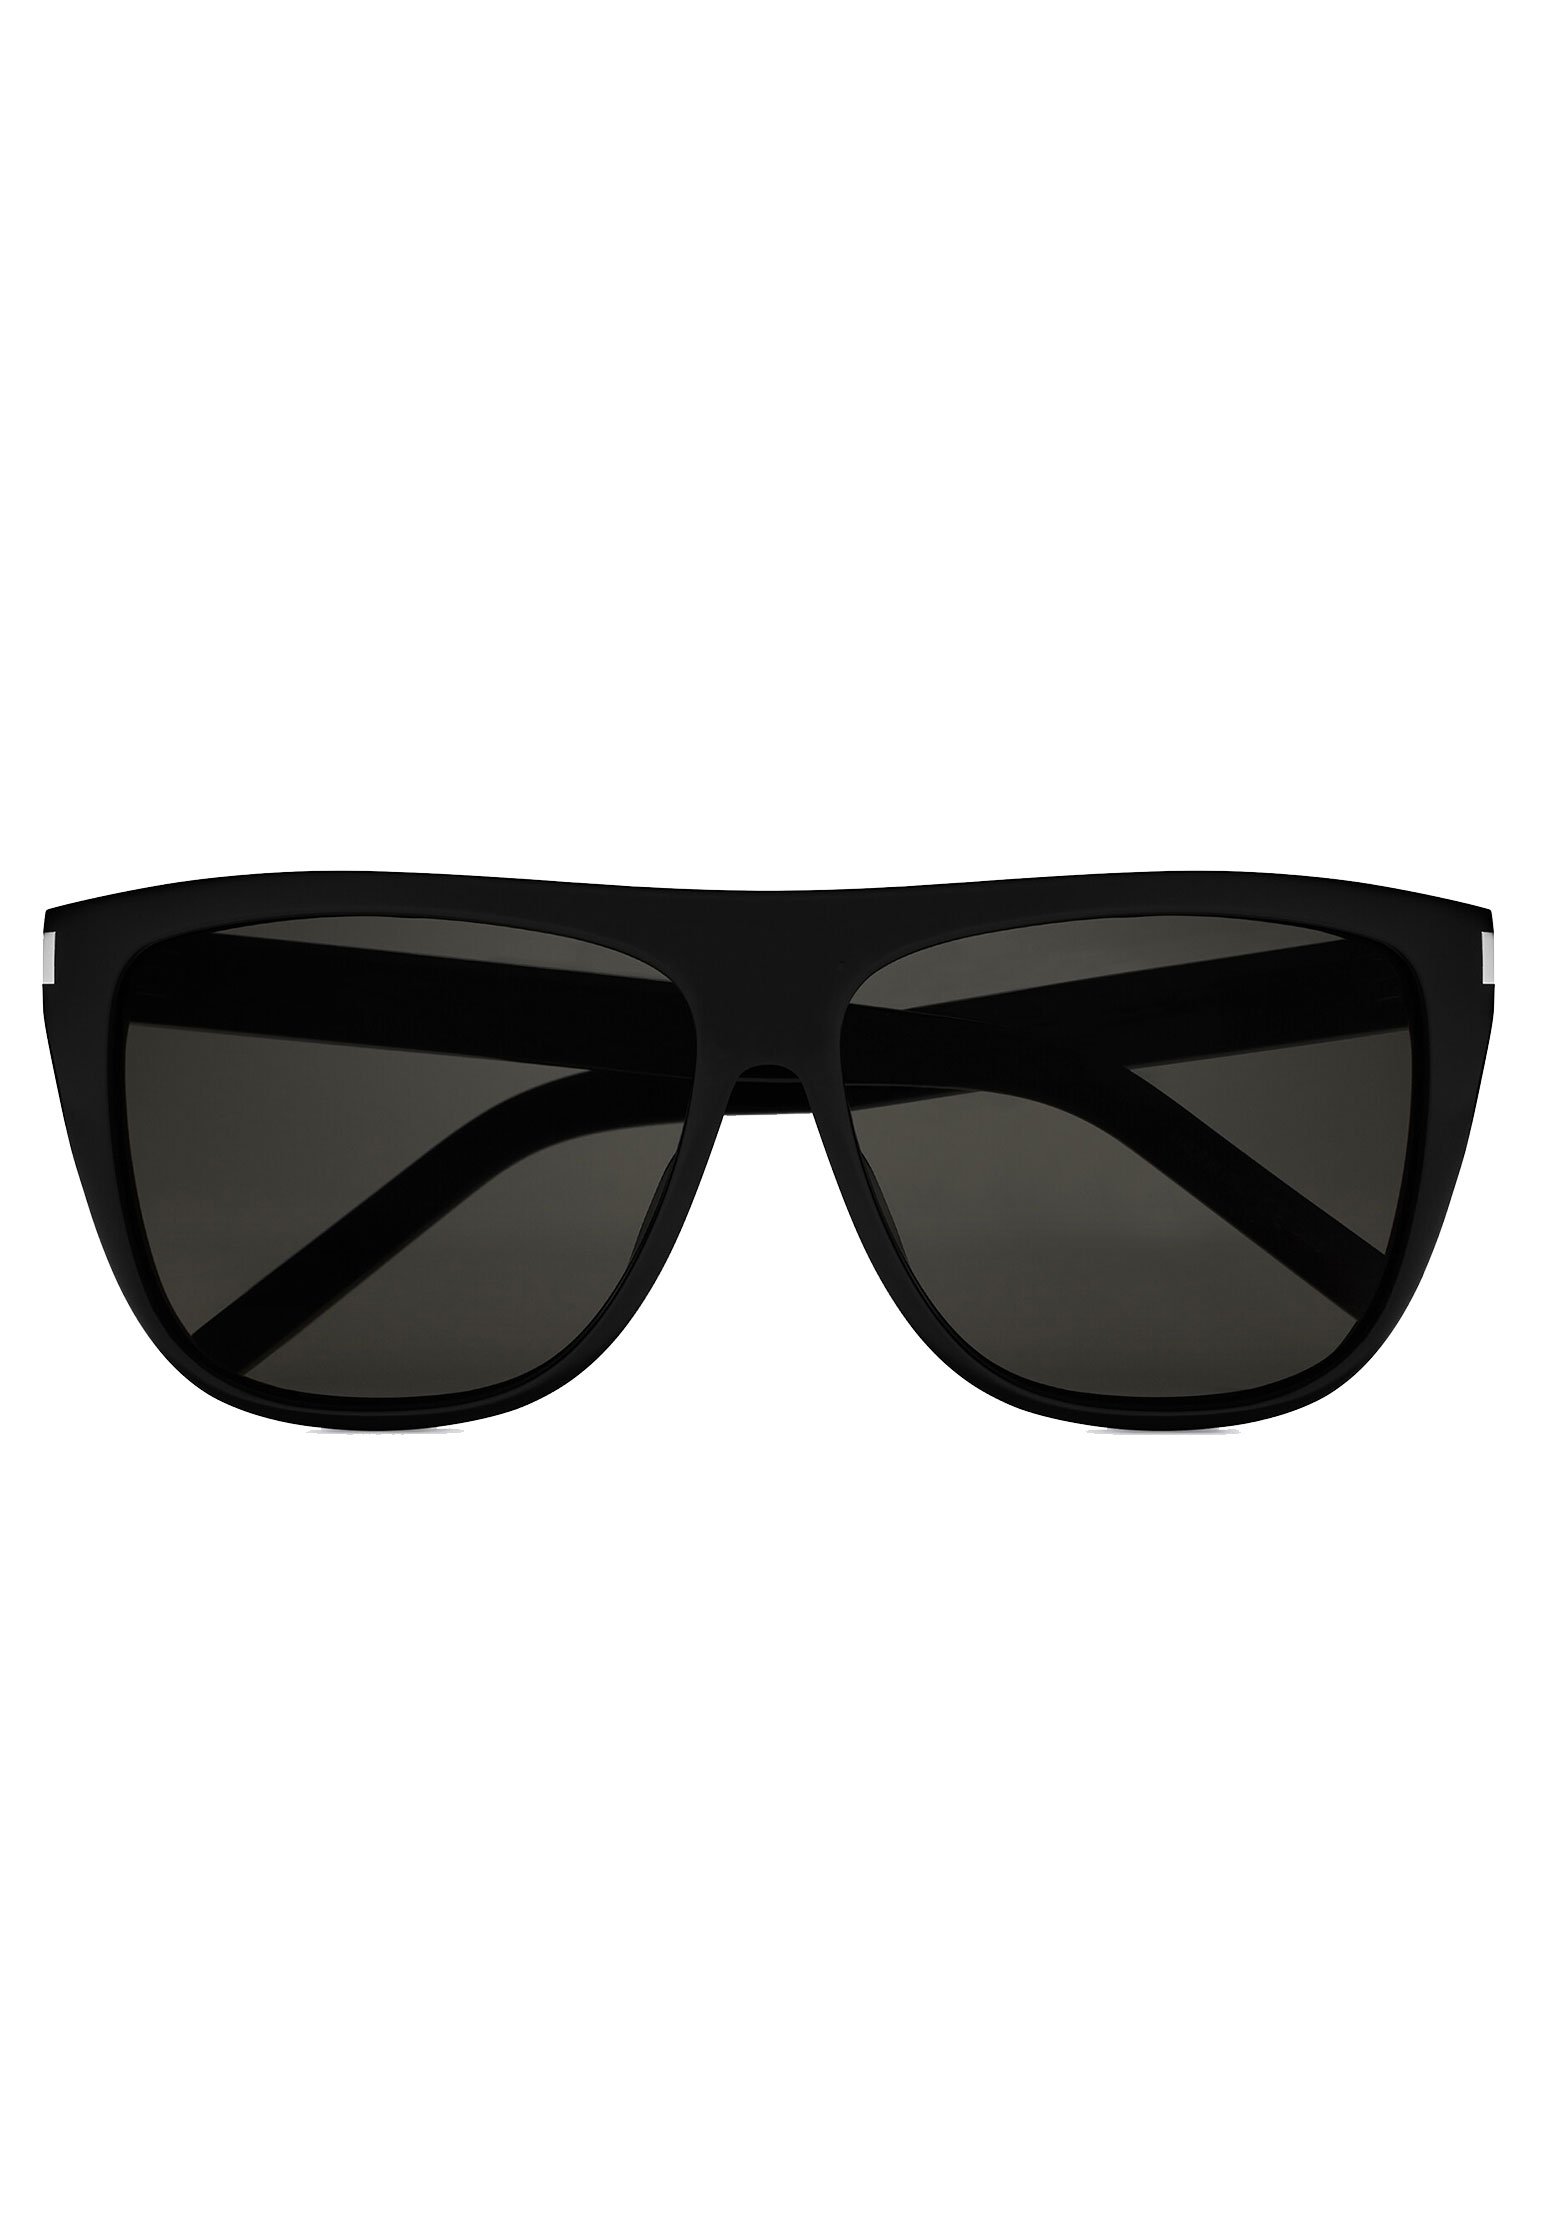 Sunglasses SAINT LAURENT Color: black (Code: 494) in online store Allure